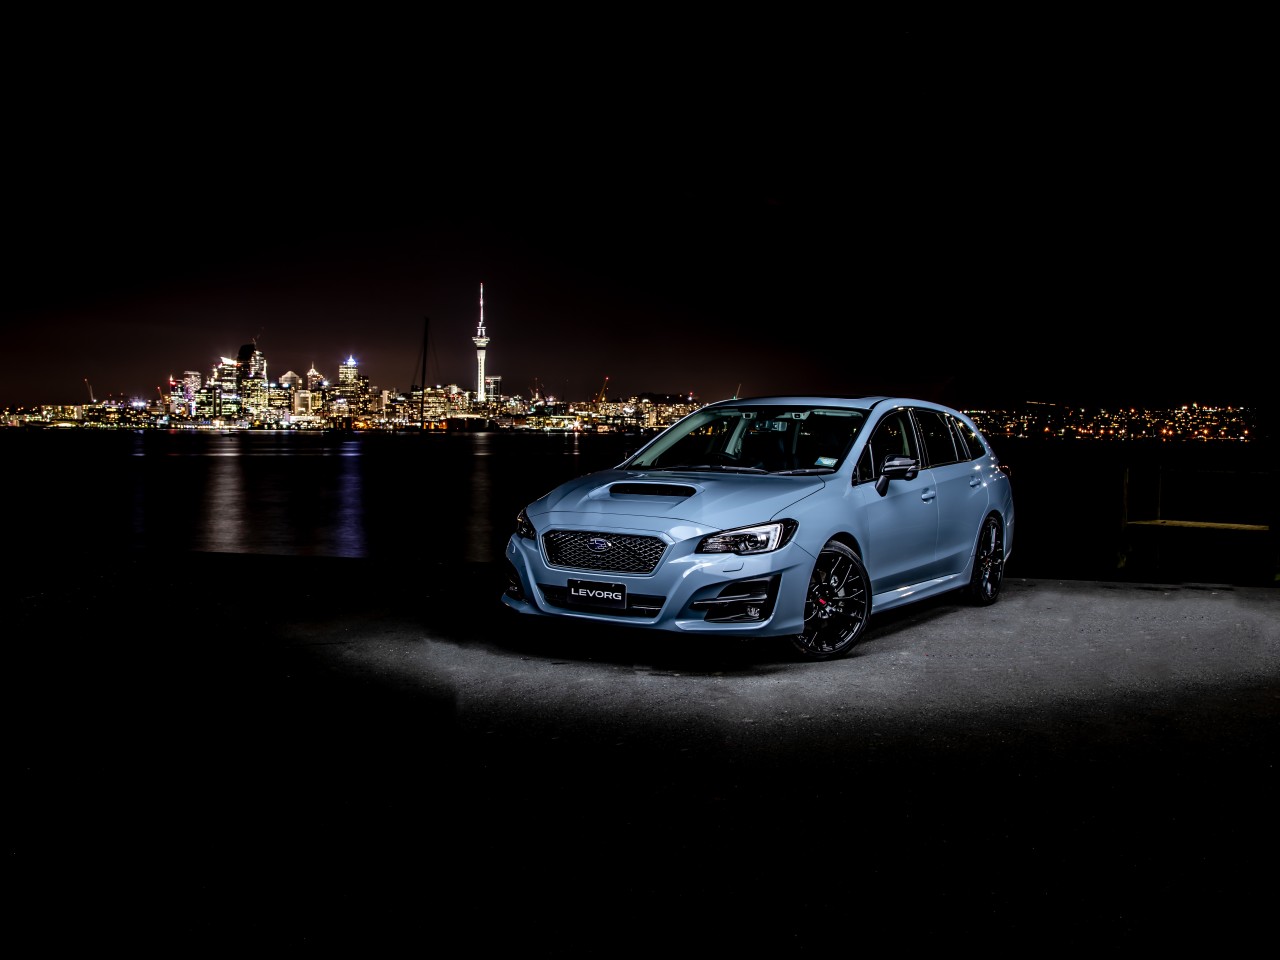 The 2020 Subaru Levorg in the night life